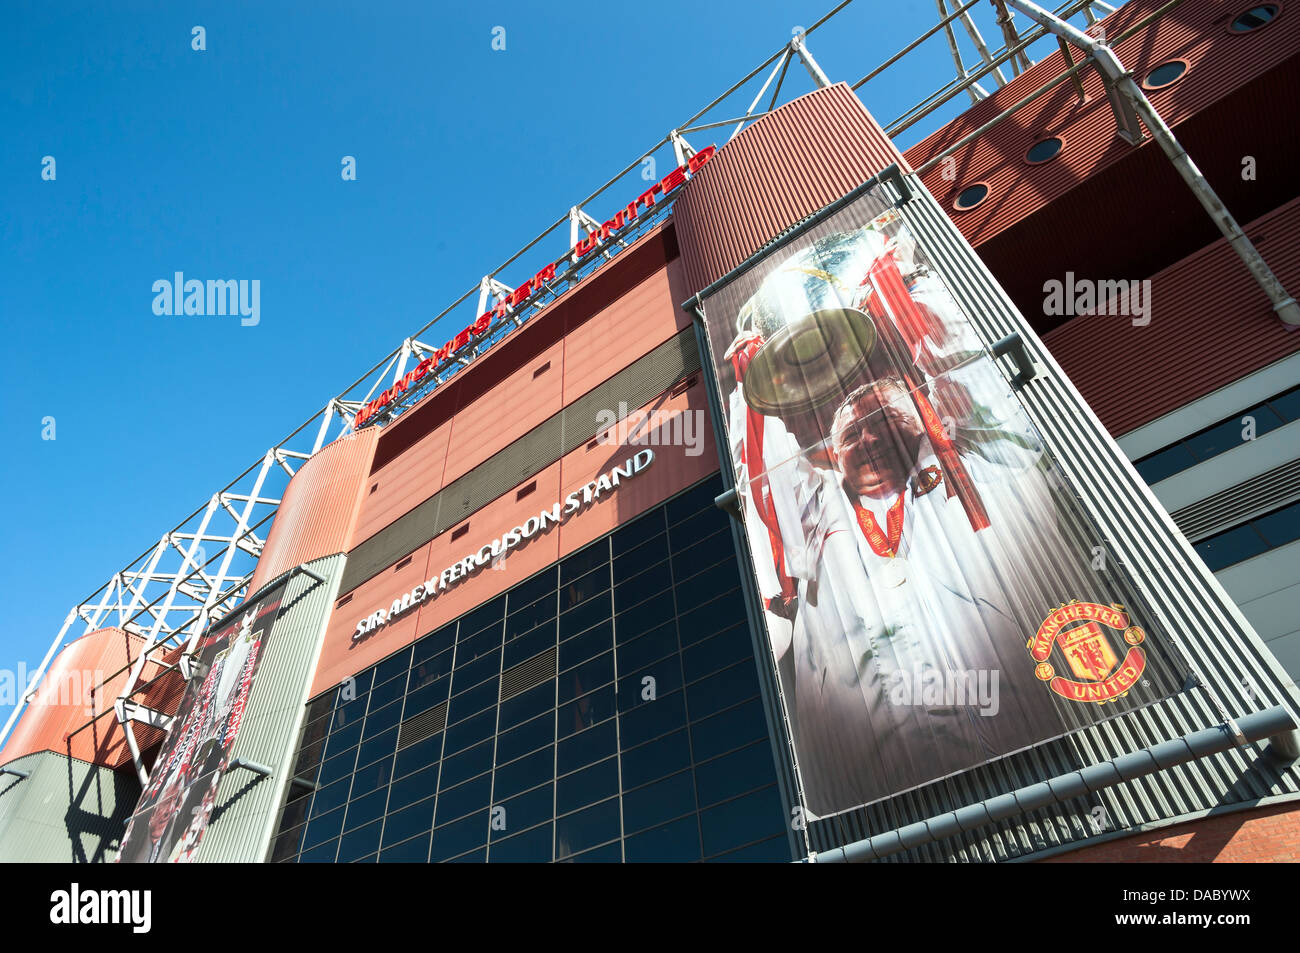 Sir Alex Ferguson Stand, Old Trafford Manchester Stock Photo